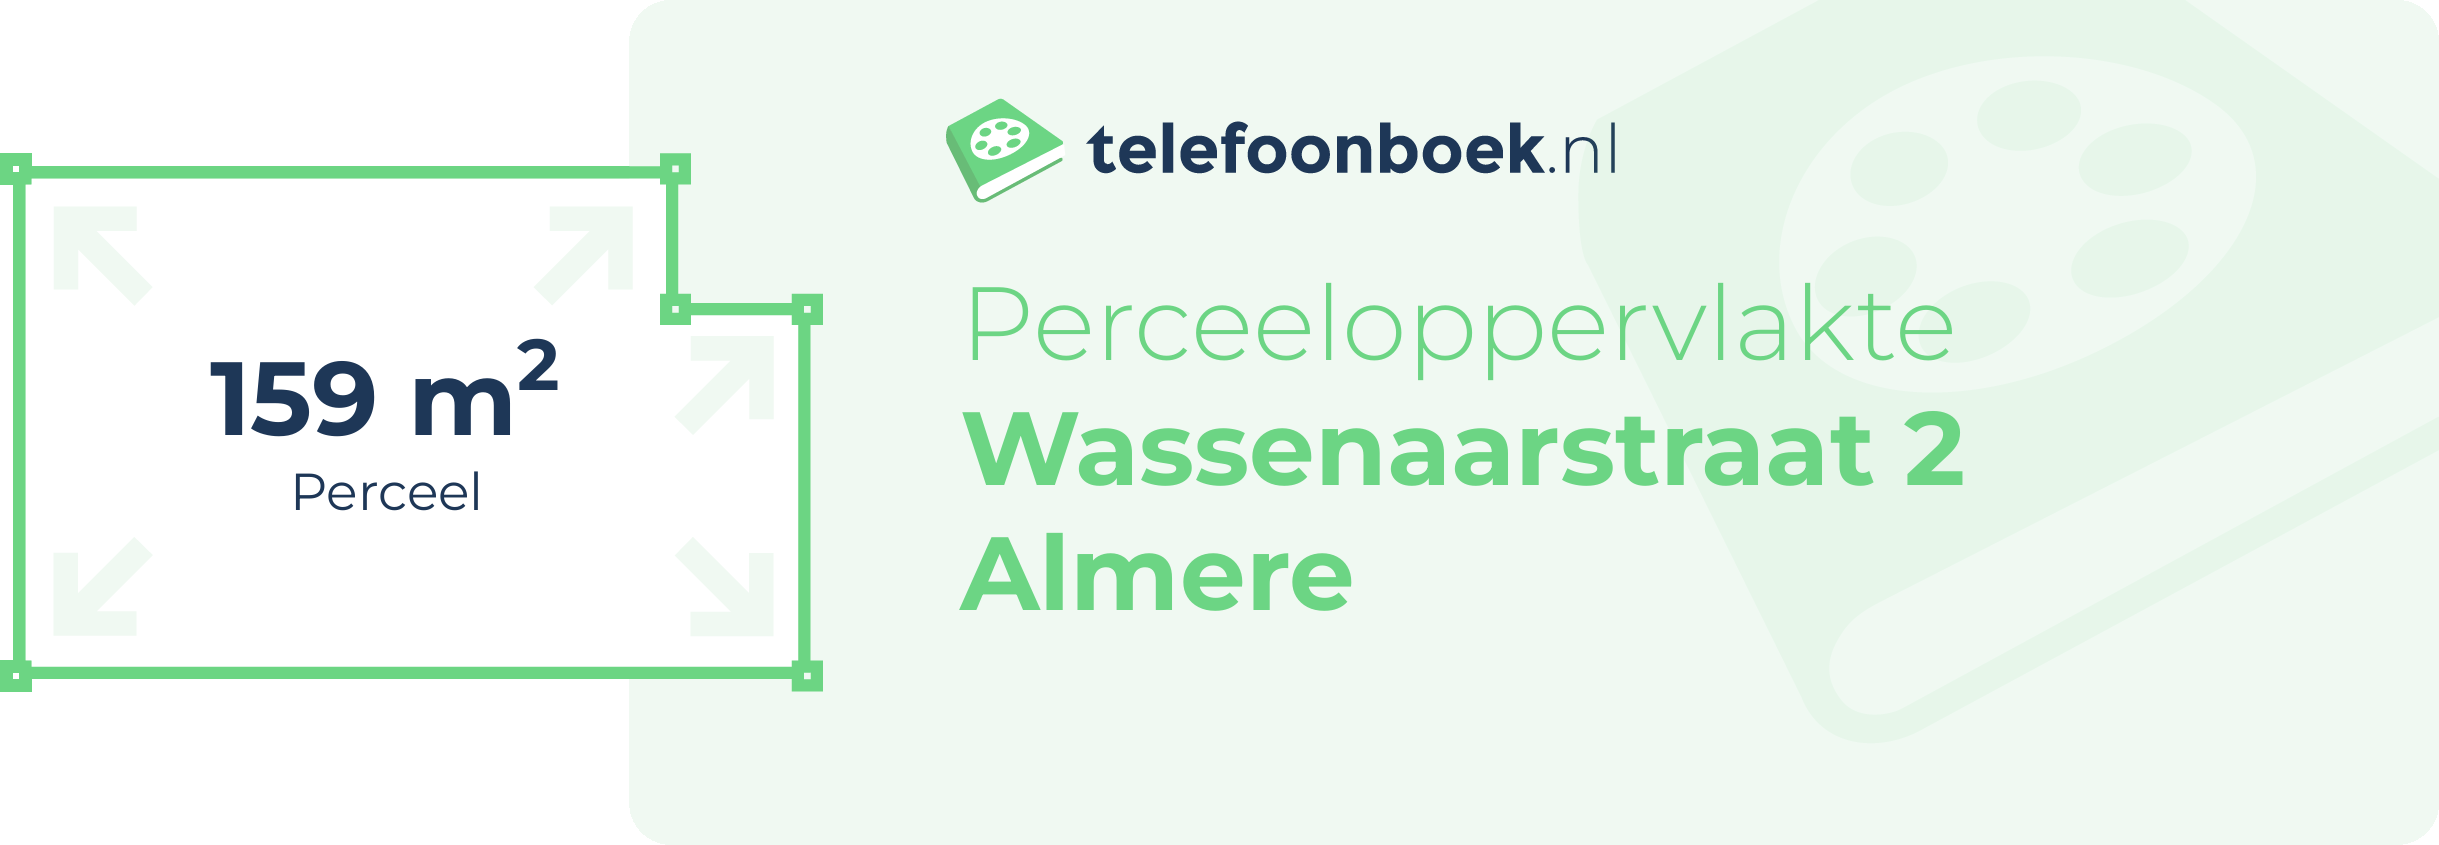 Perceeloppervlakte Wassenaarstraat 2 Almere